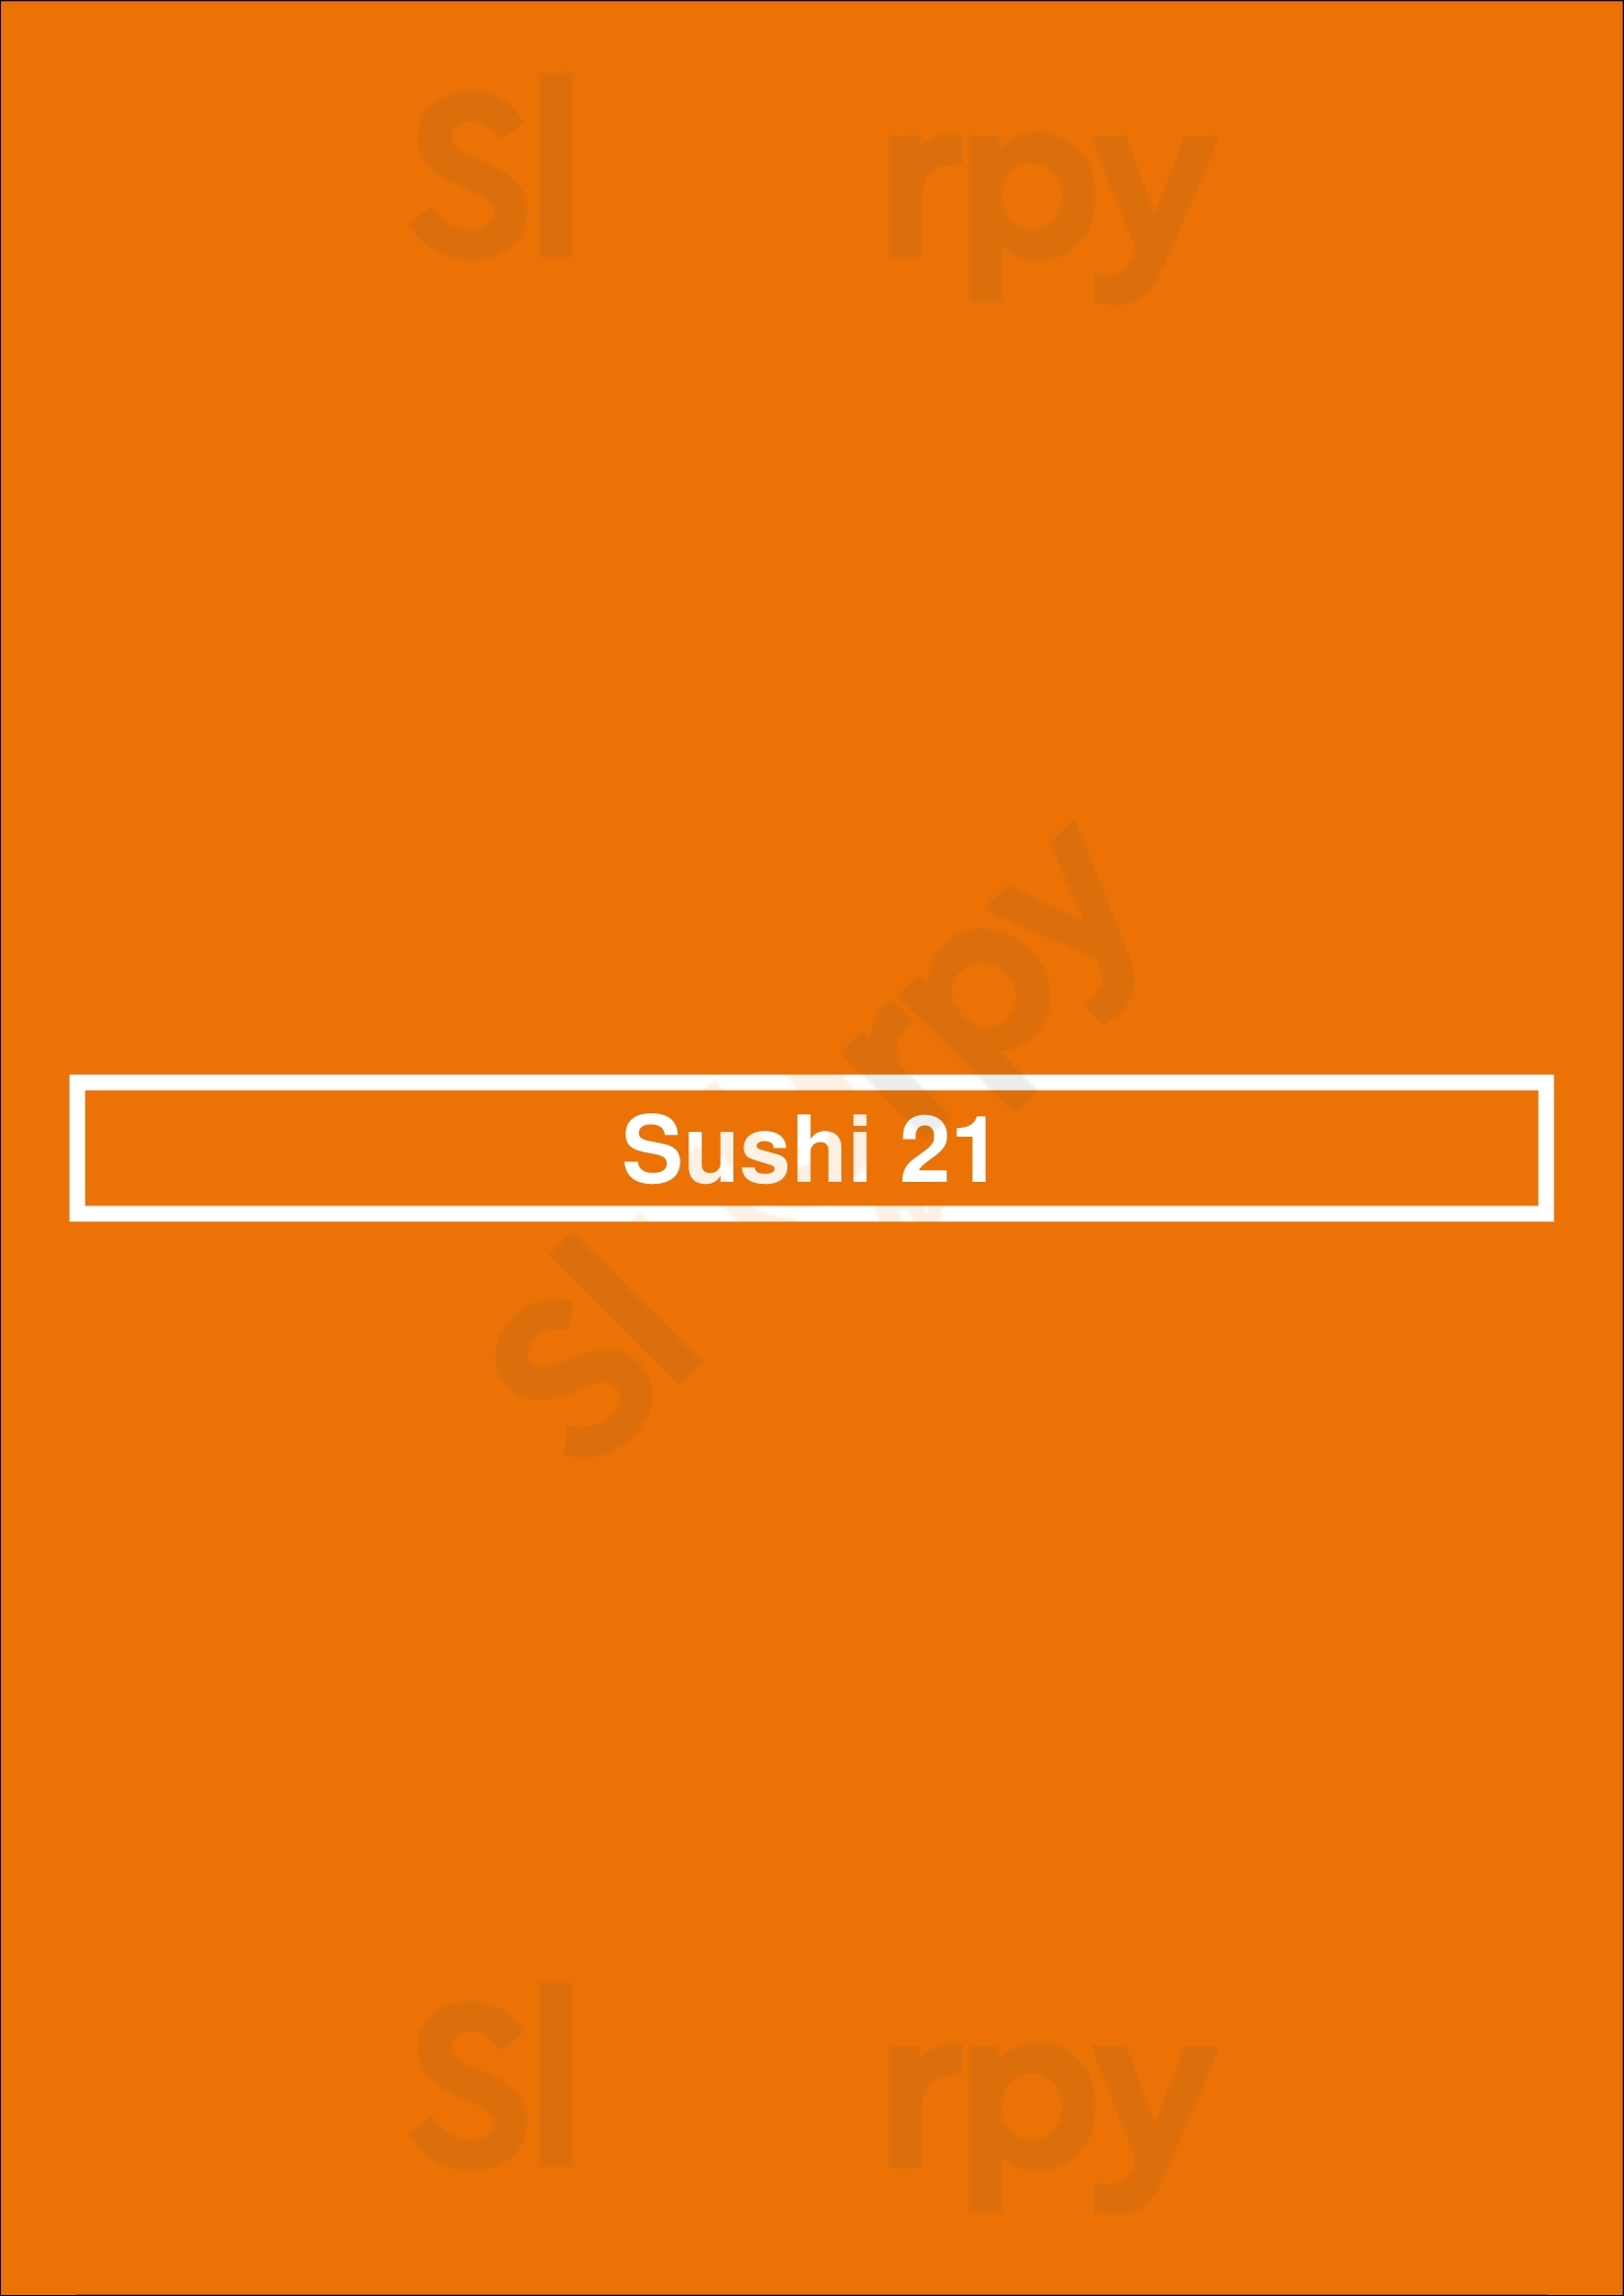 Sushi 21 Los Angeles Menu - 1